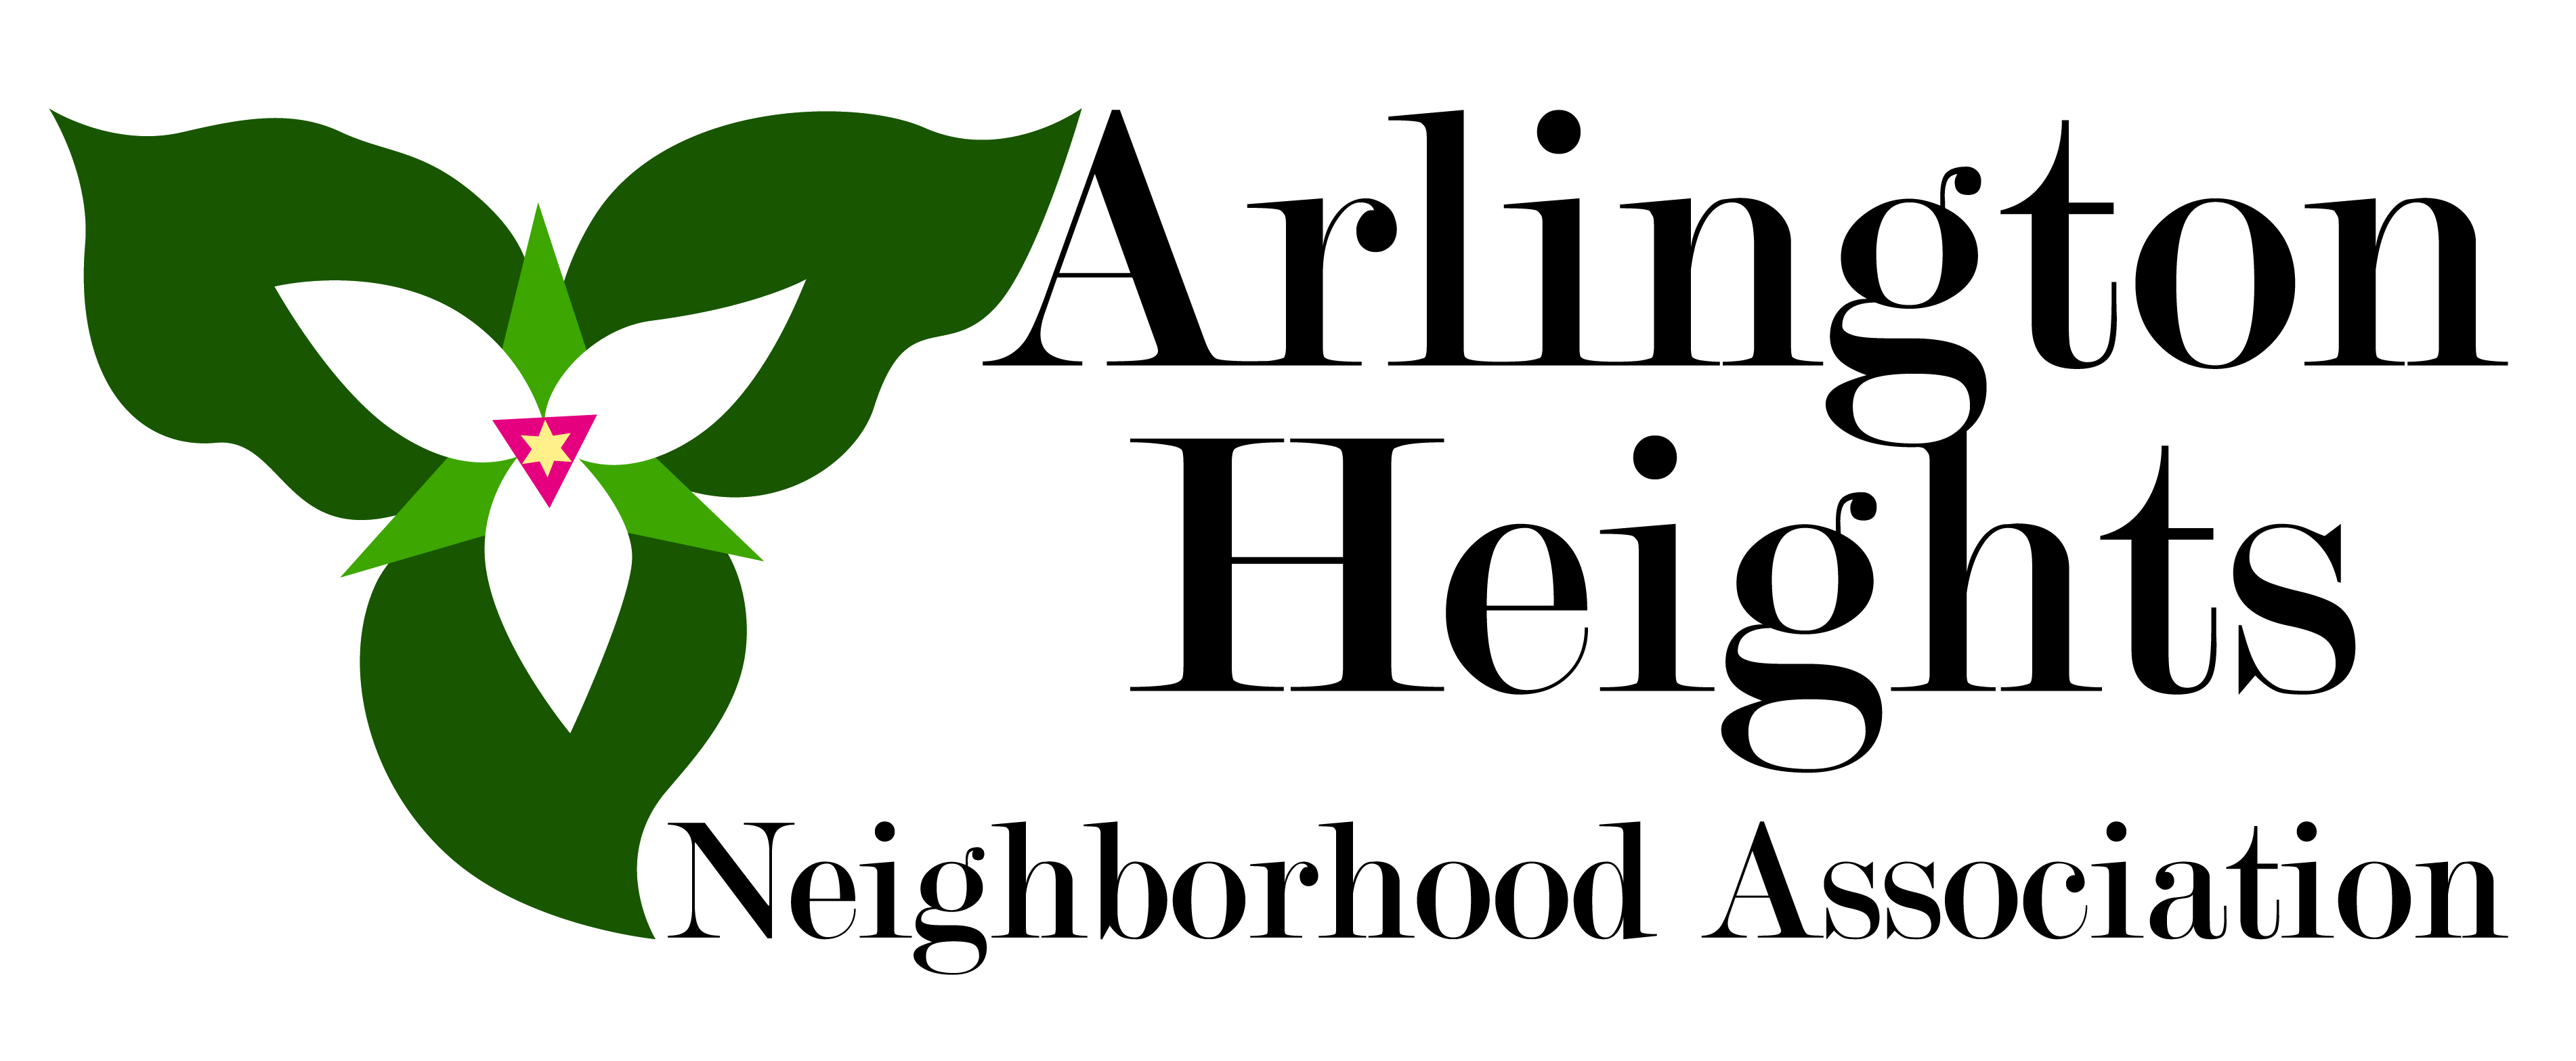 NA Photo Arlington Heights Neighborhood Association